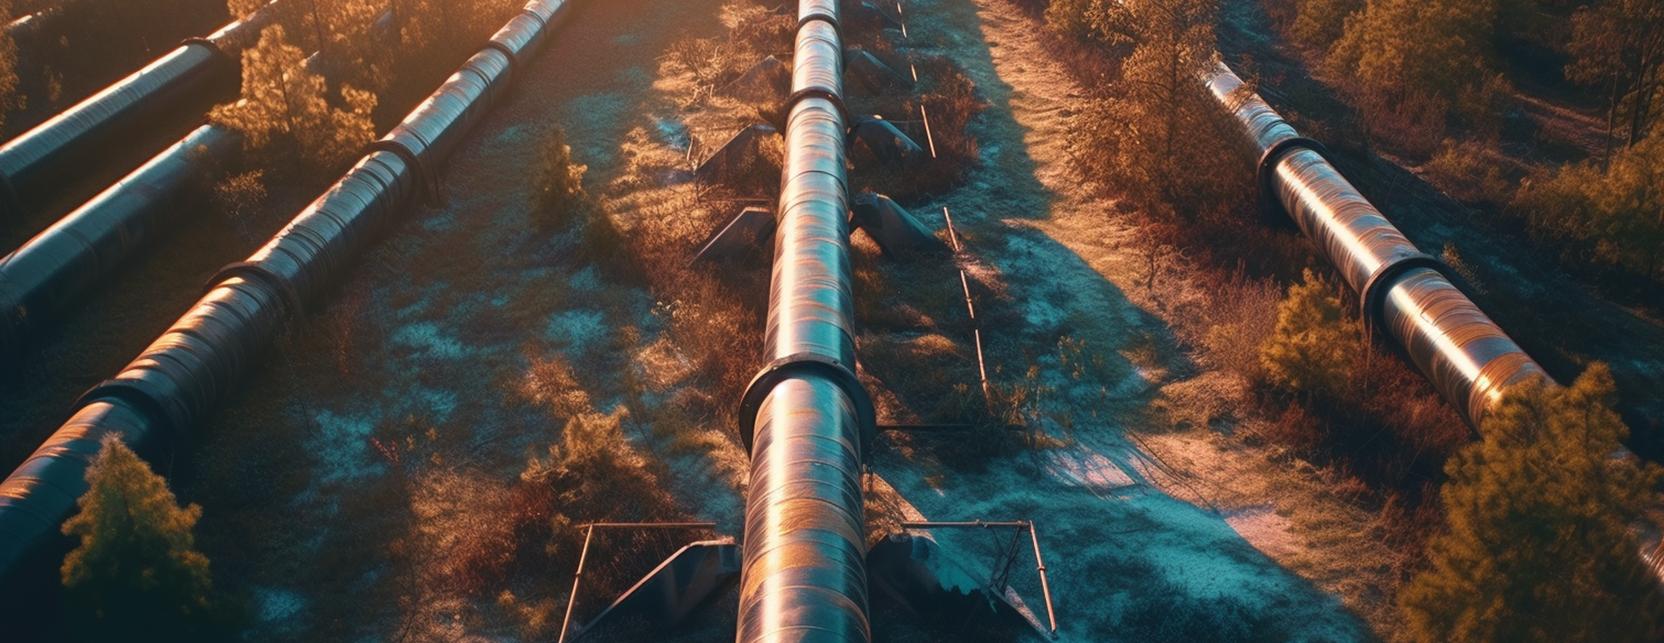 Pipelines-Sonnenuntergang